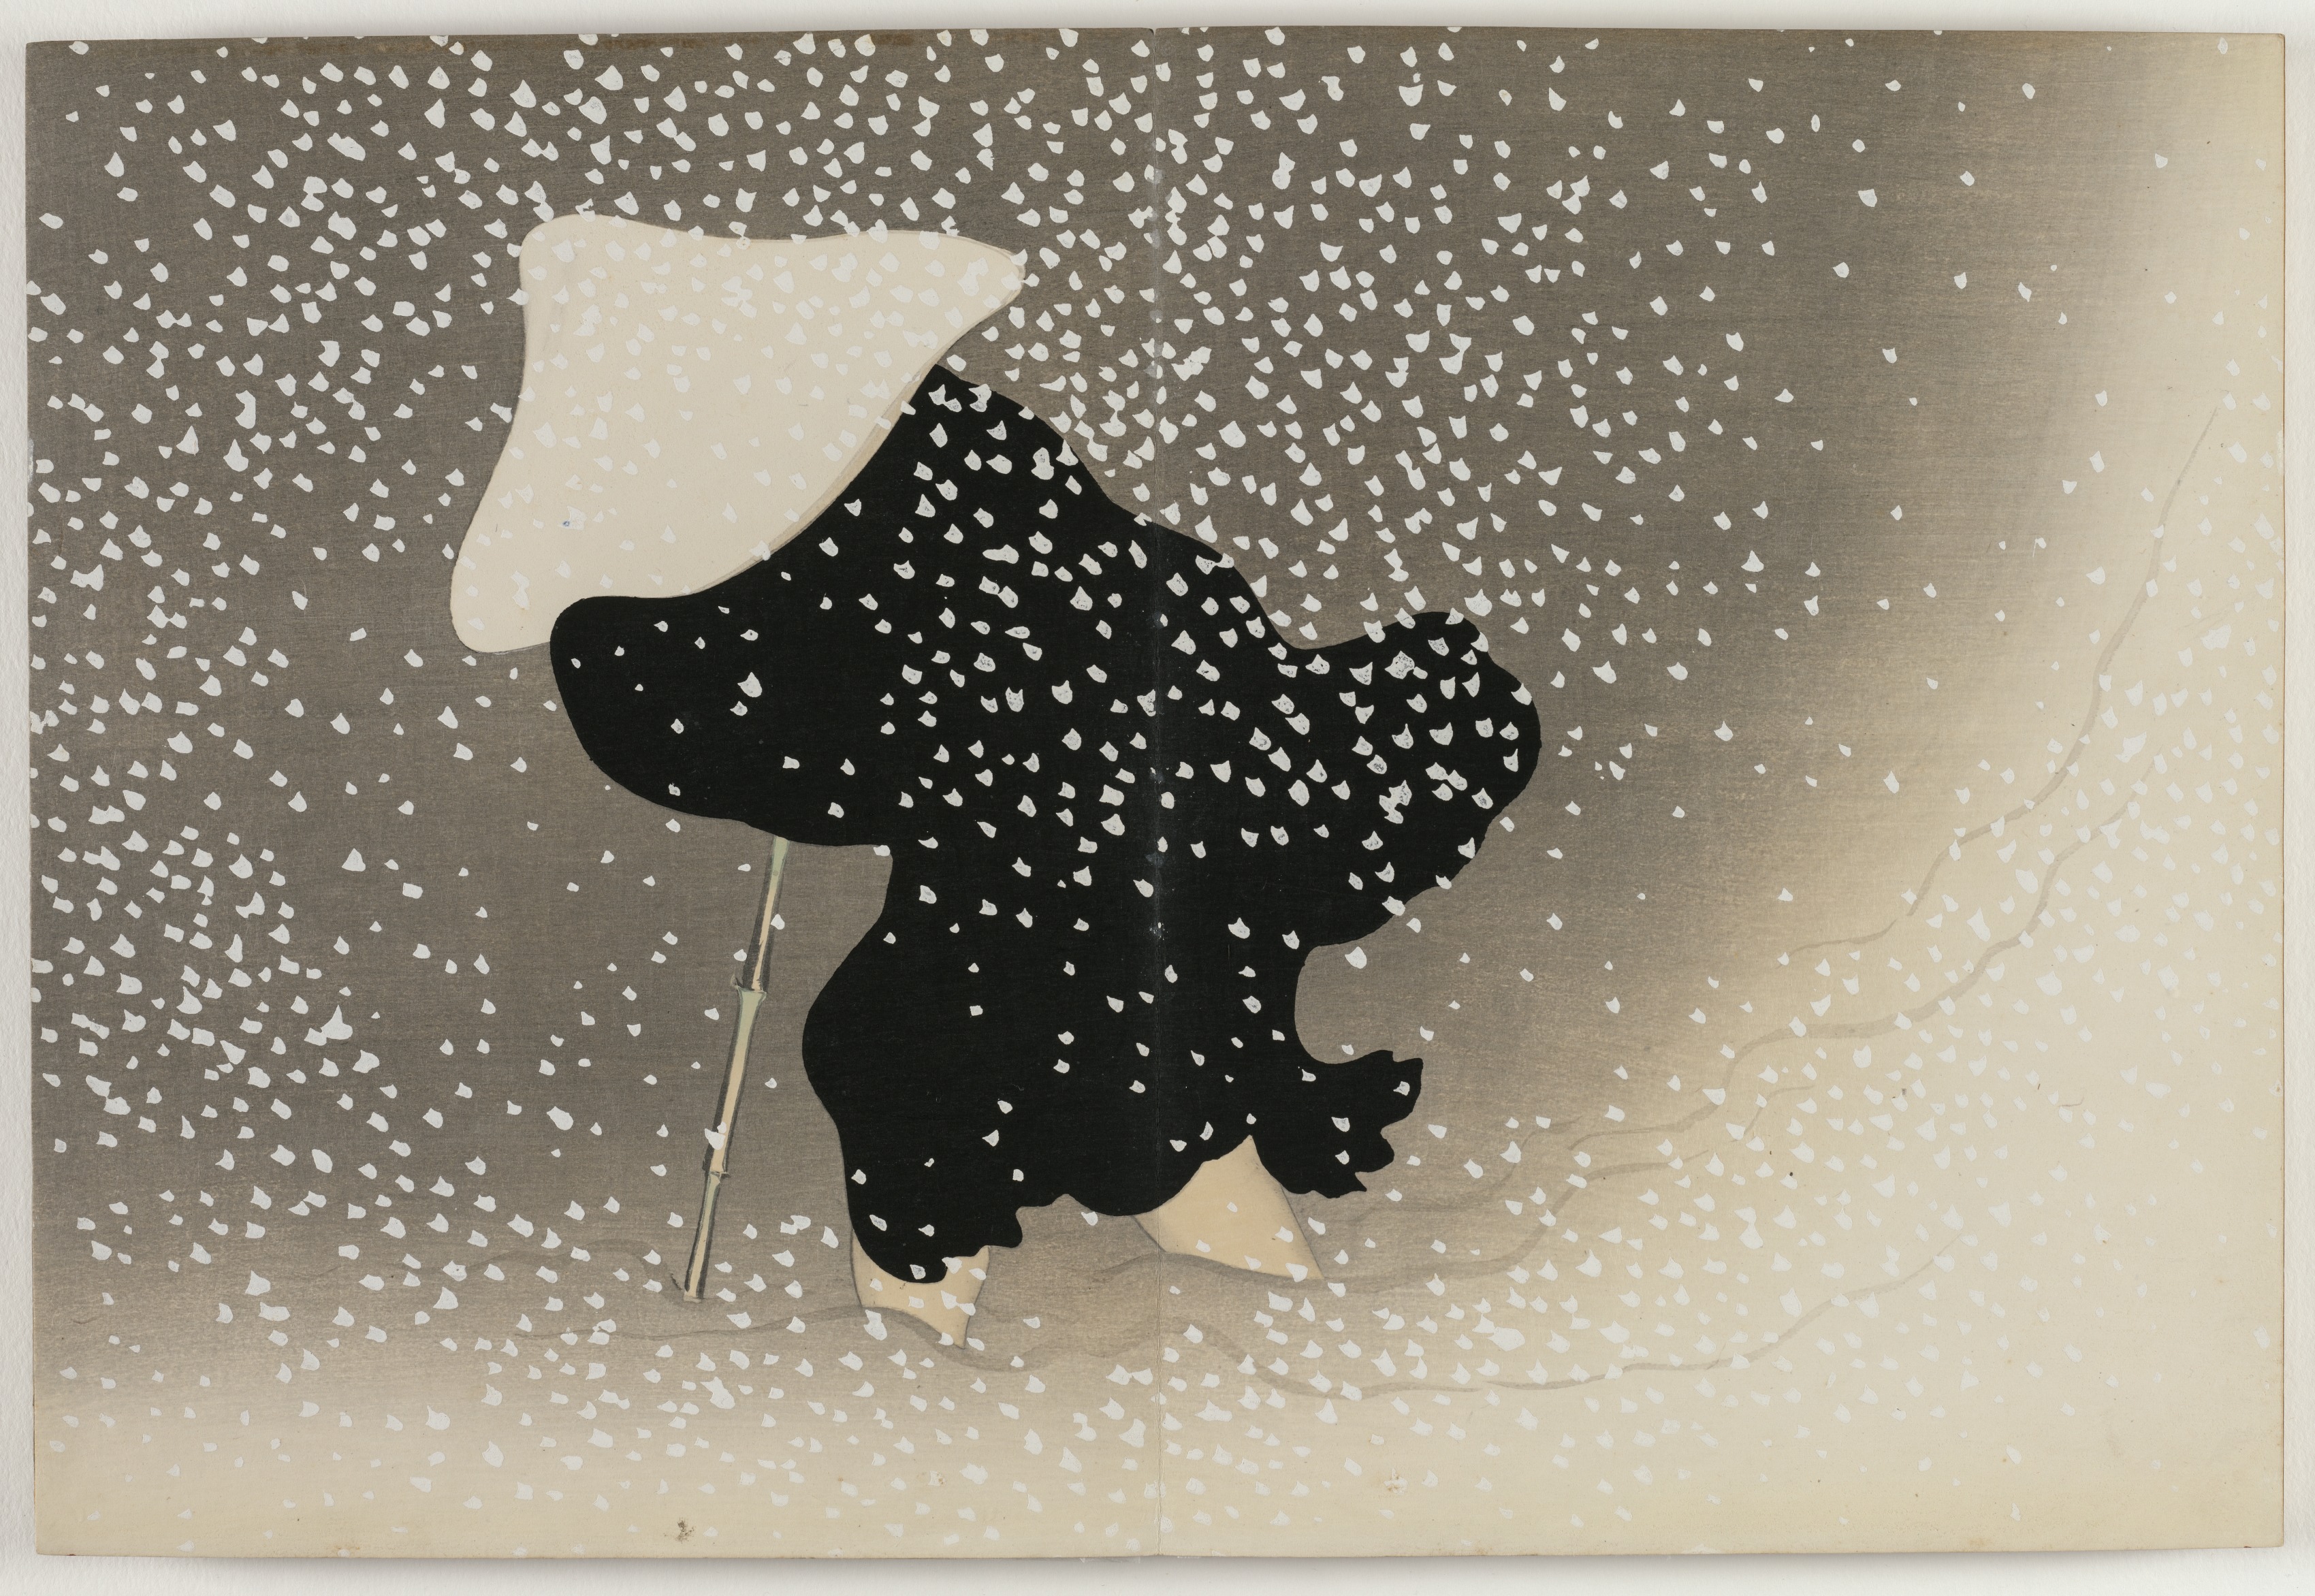 Fleurs de cent mondes : Tourbillon de neige by Kamisaka Sekka - 1909-10 - 29.9 x 22.1 cm Metropolitan Museum of Art